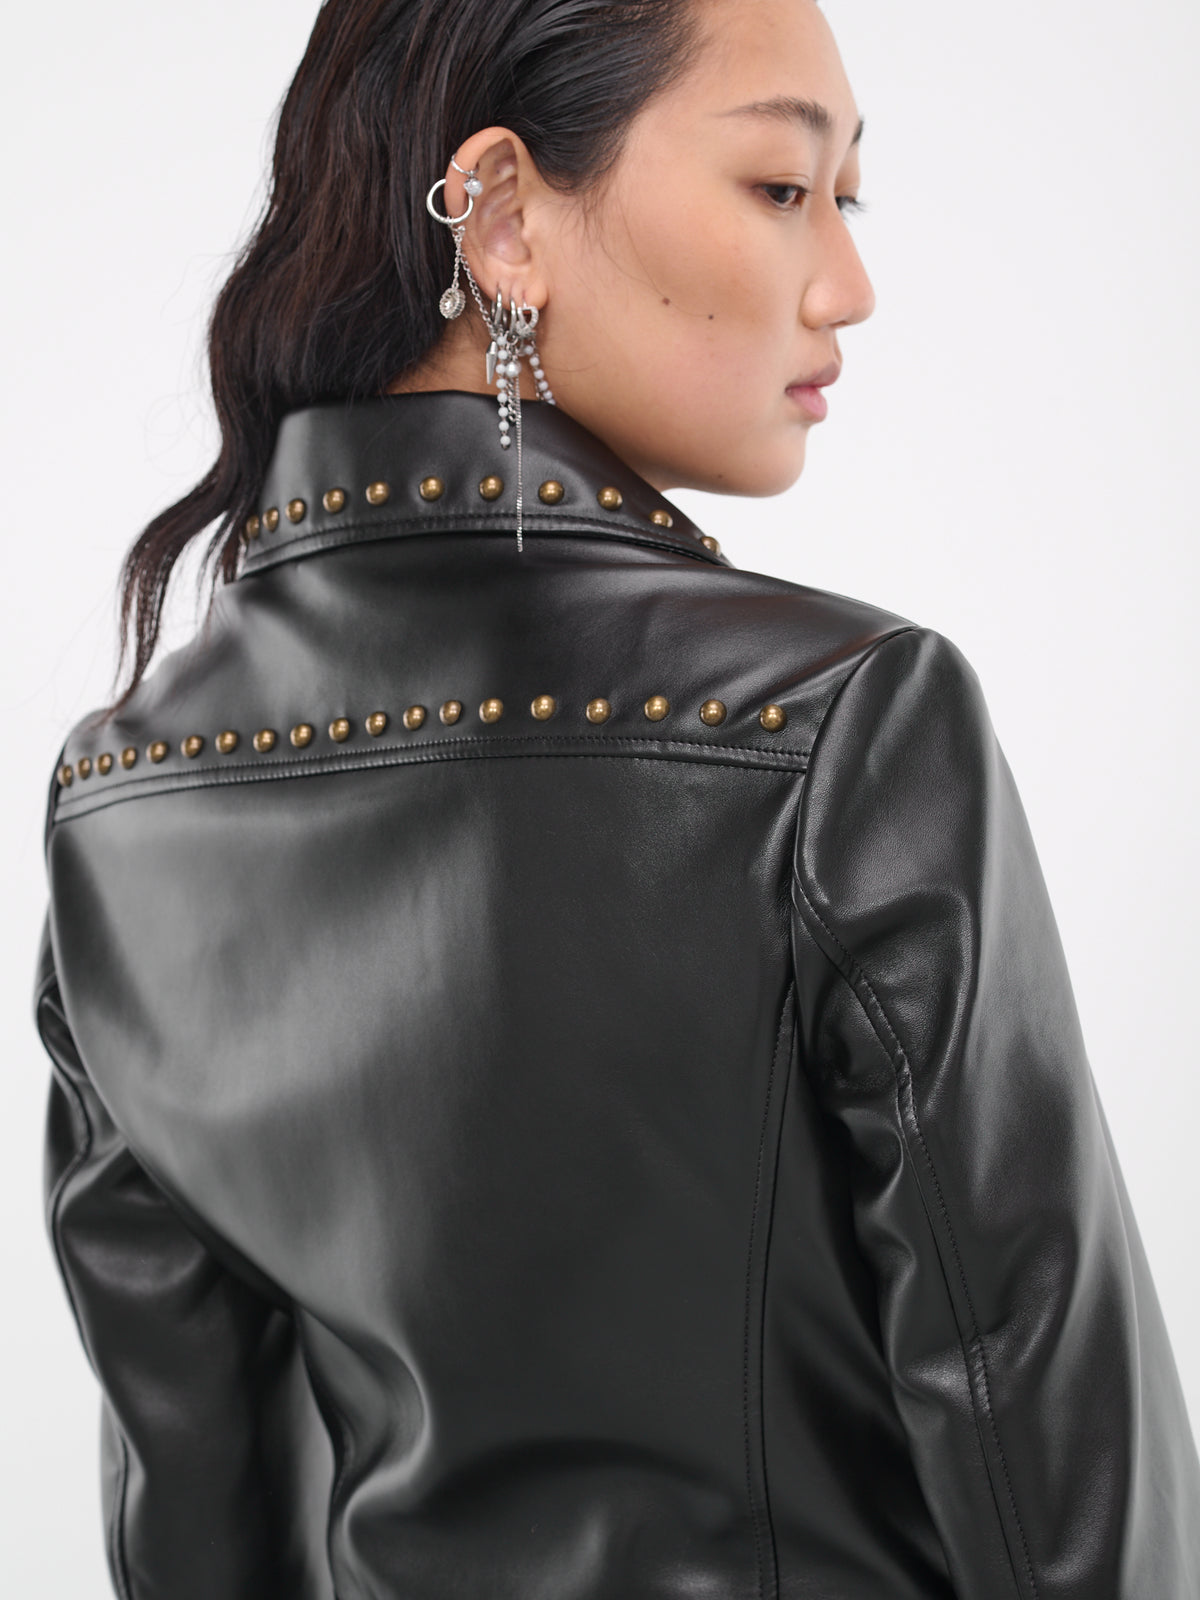 Studded Leather Jacket (A0501-8718-BLACK)